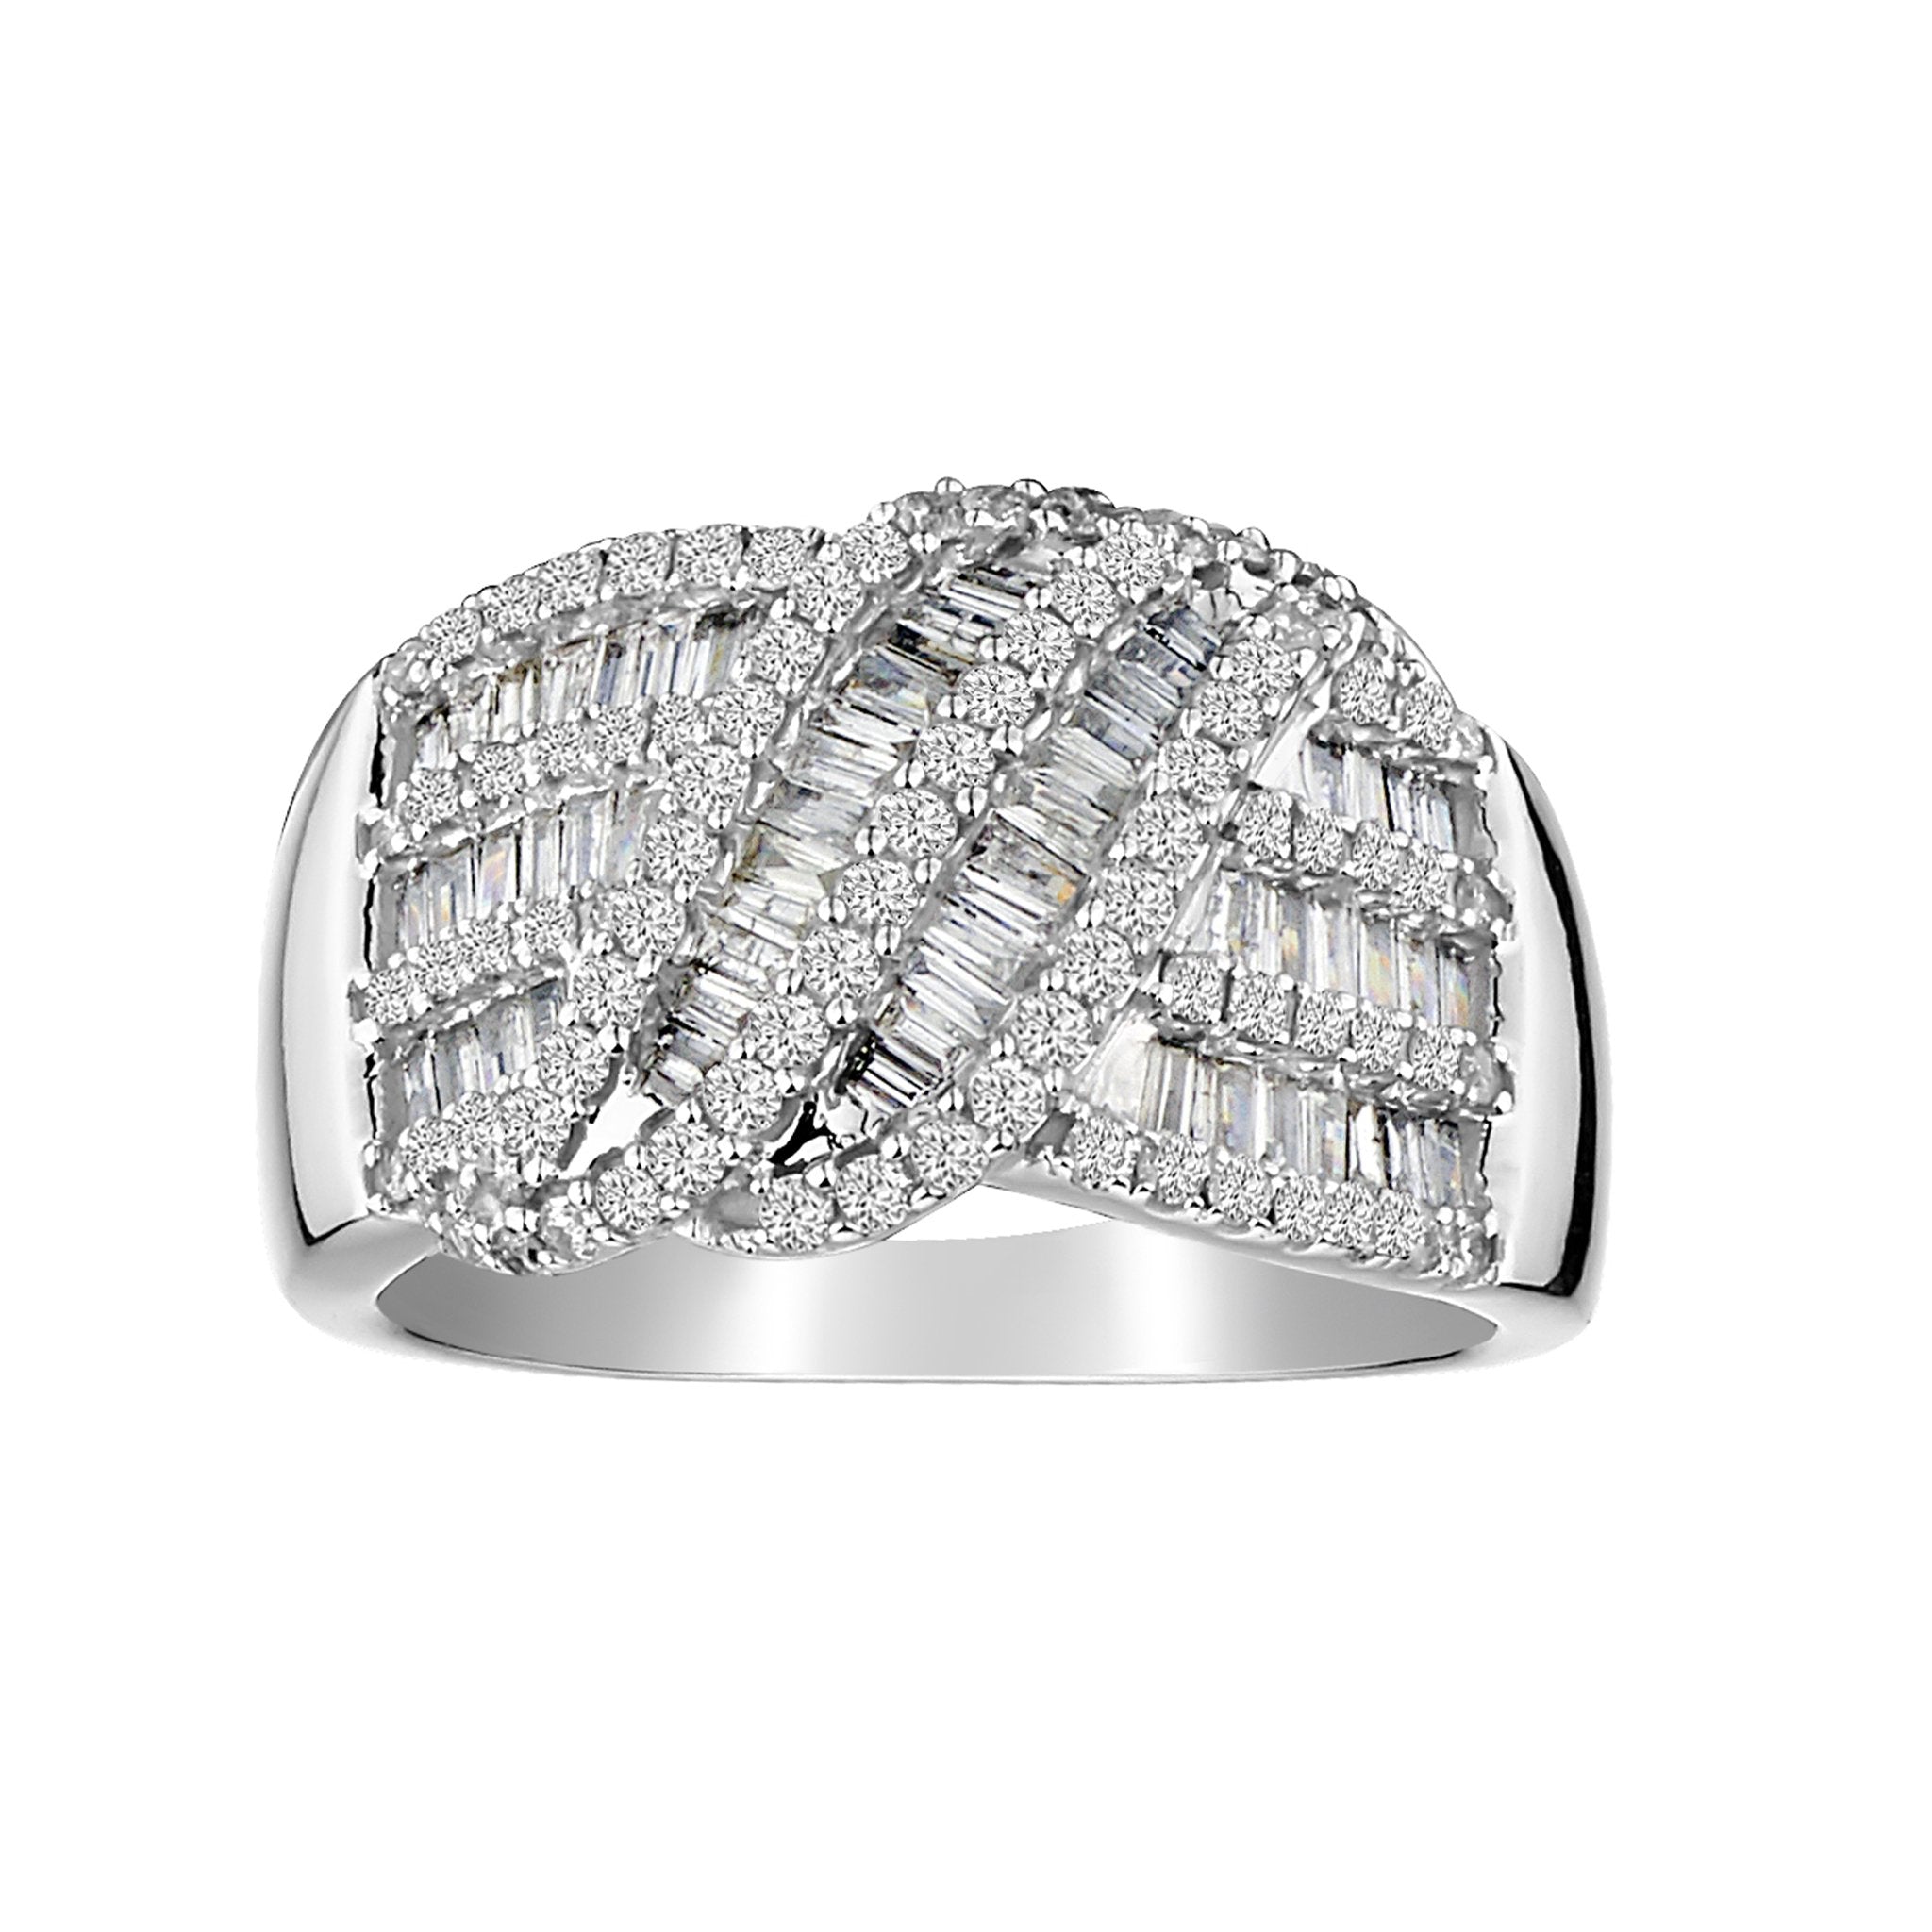 1.00 Carat Diamond Ring, 10kt White Gold.......................NOW